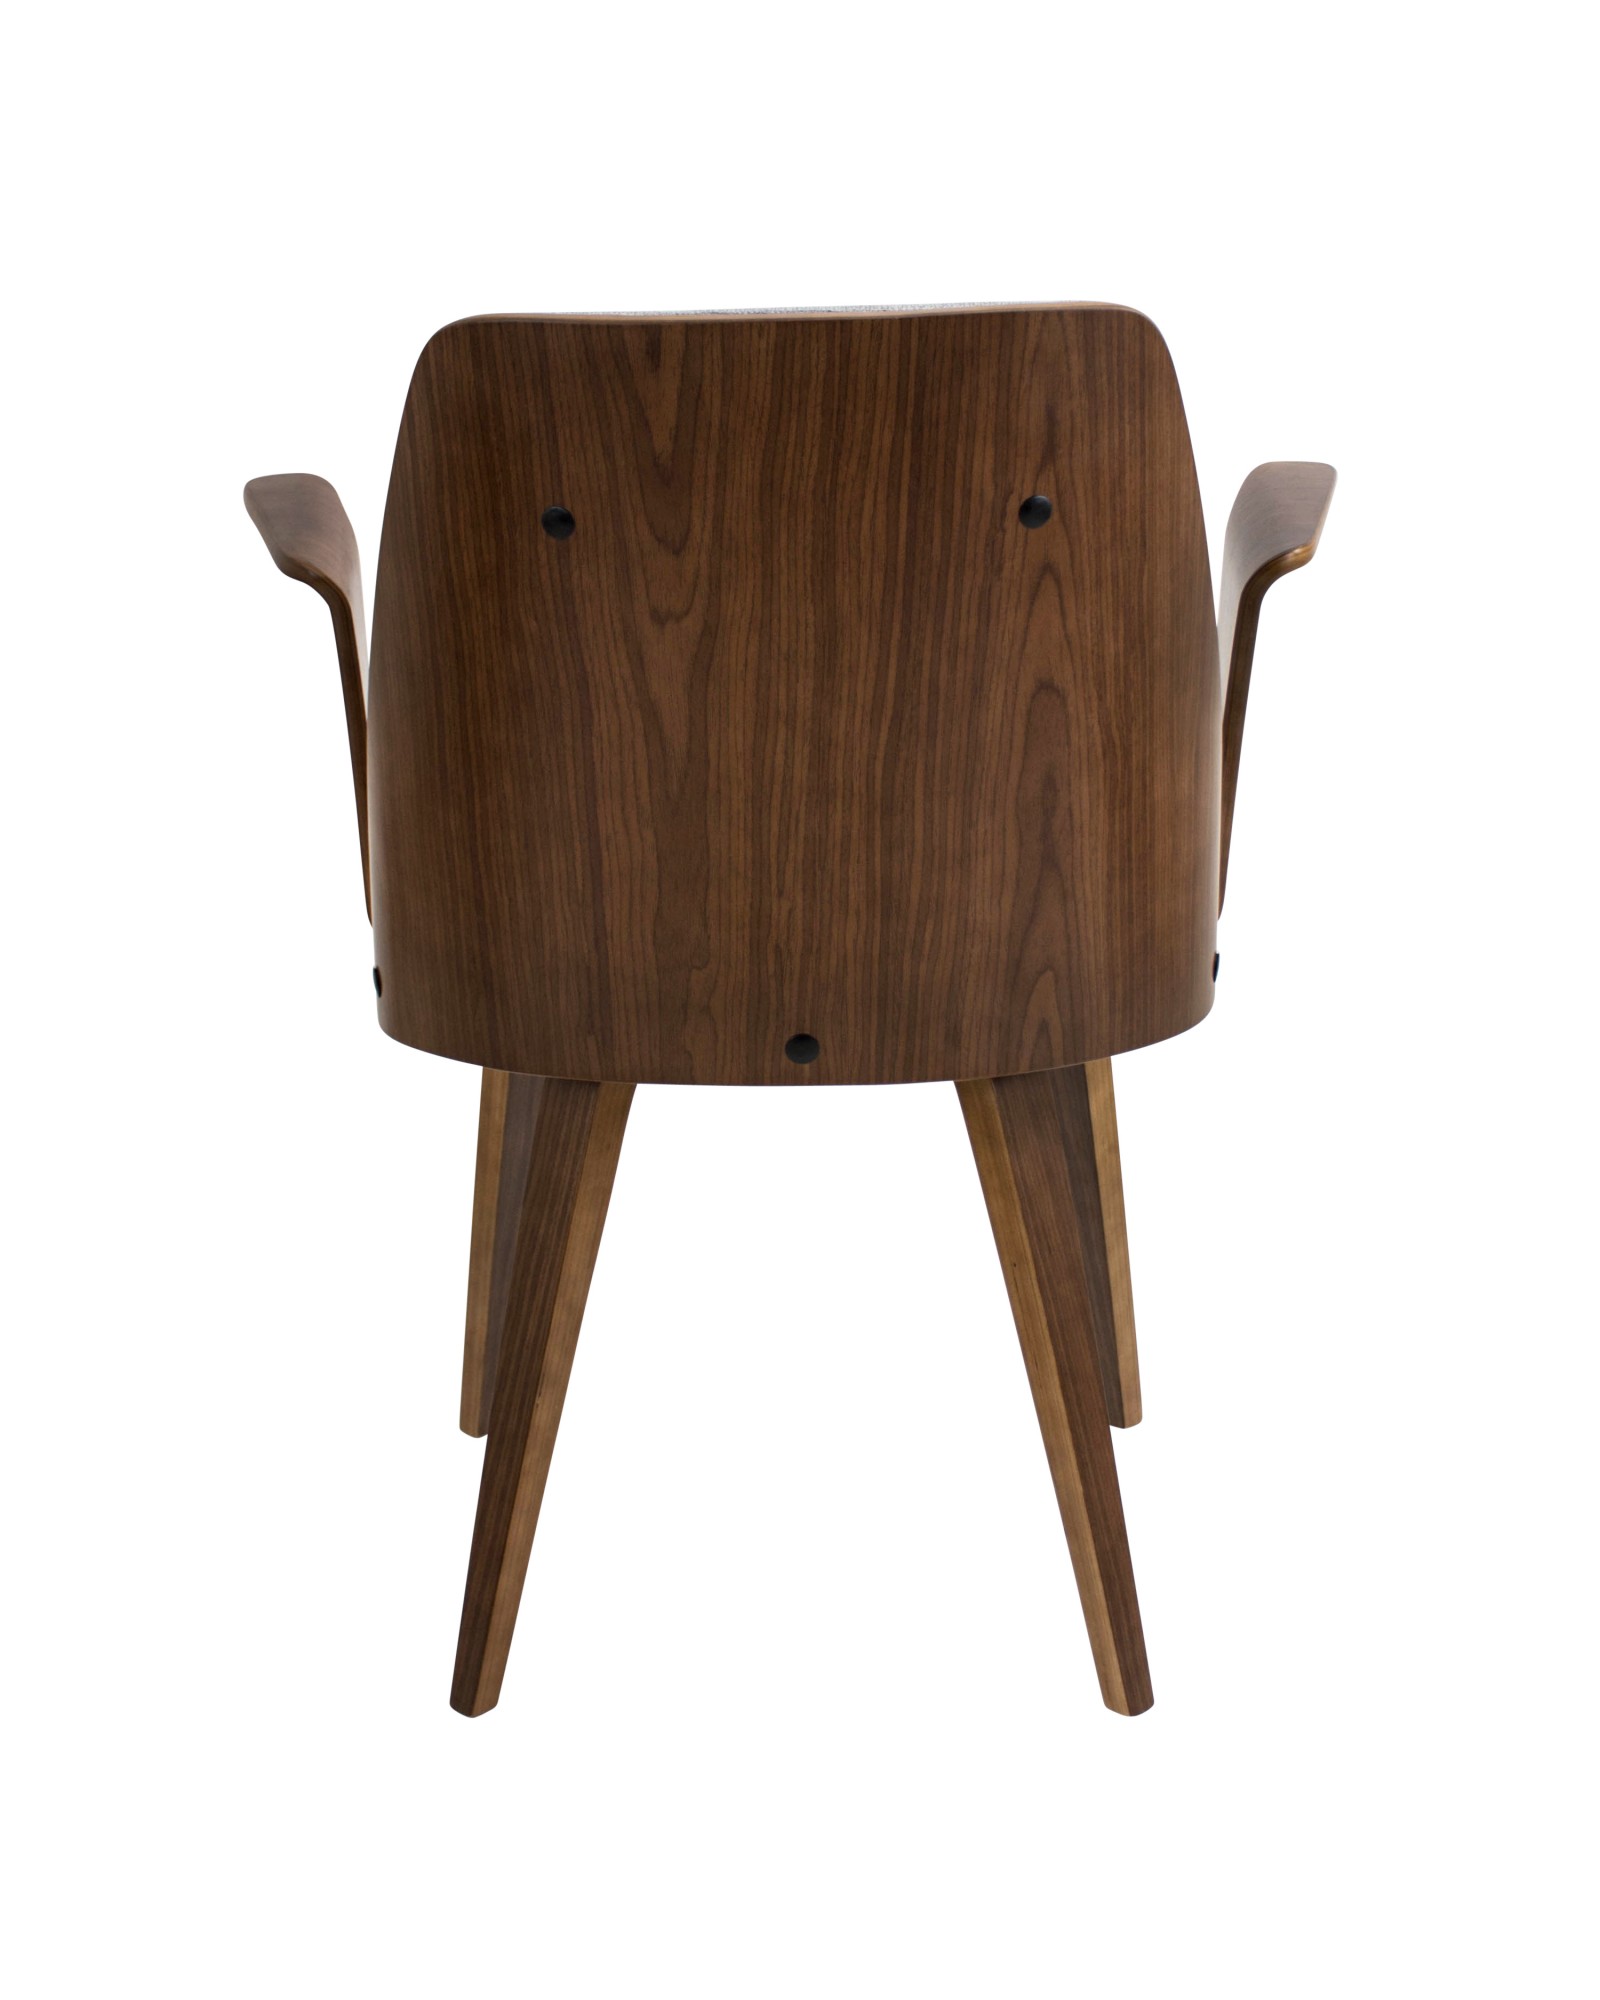 Verdana Mid-Century Modern Dining/Accent Chair in Walnut with Grey Fabric